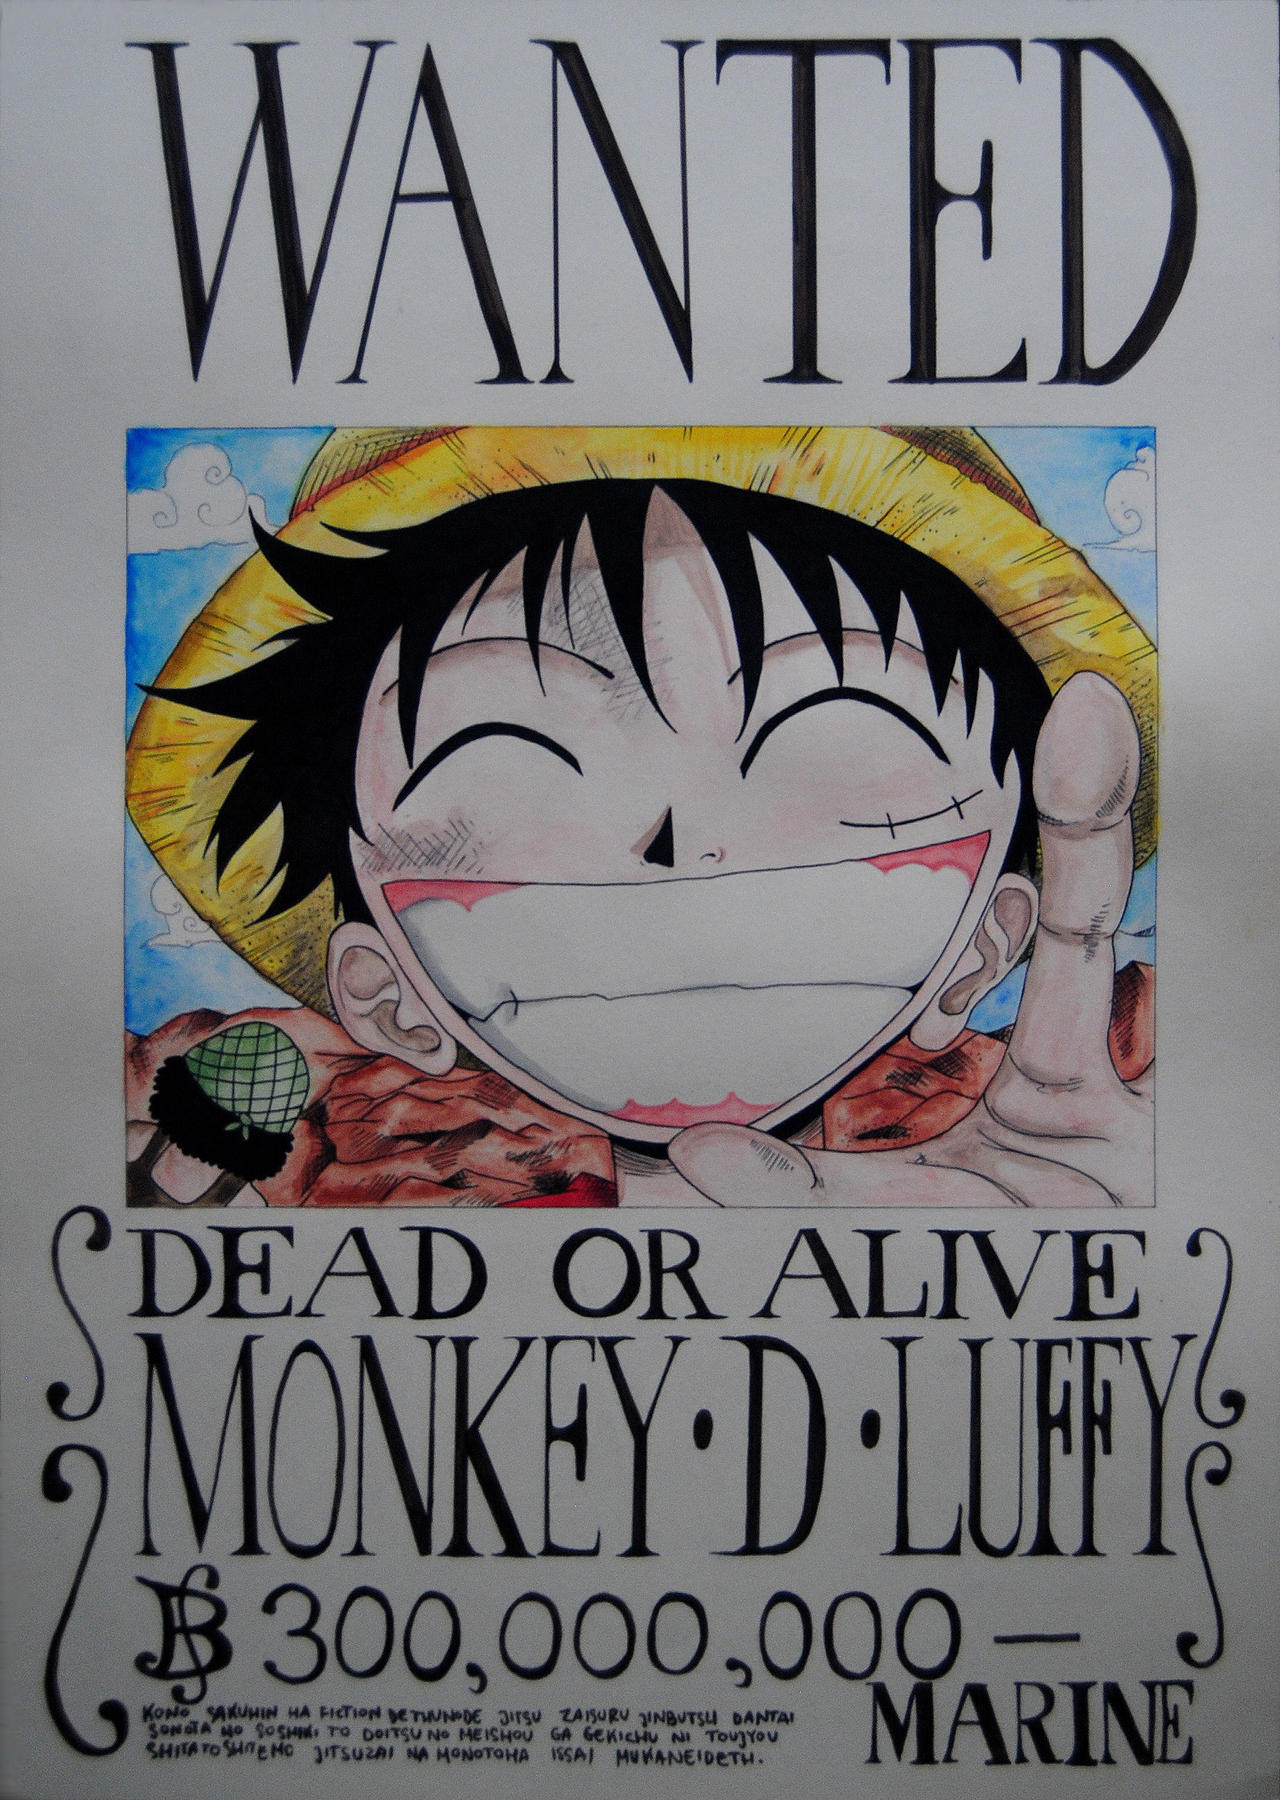 WANTED Monkey D Luffy poster by sskoczek on DeviantArt